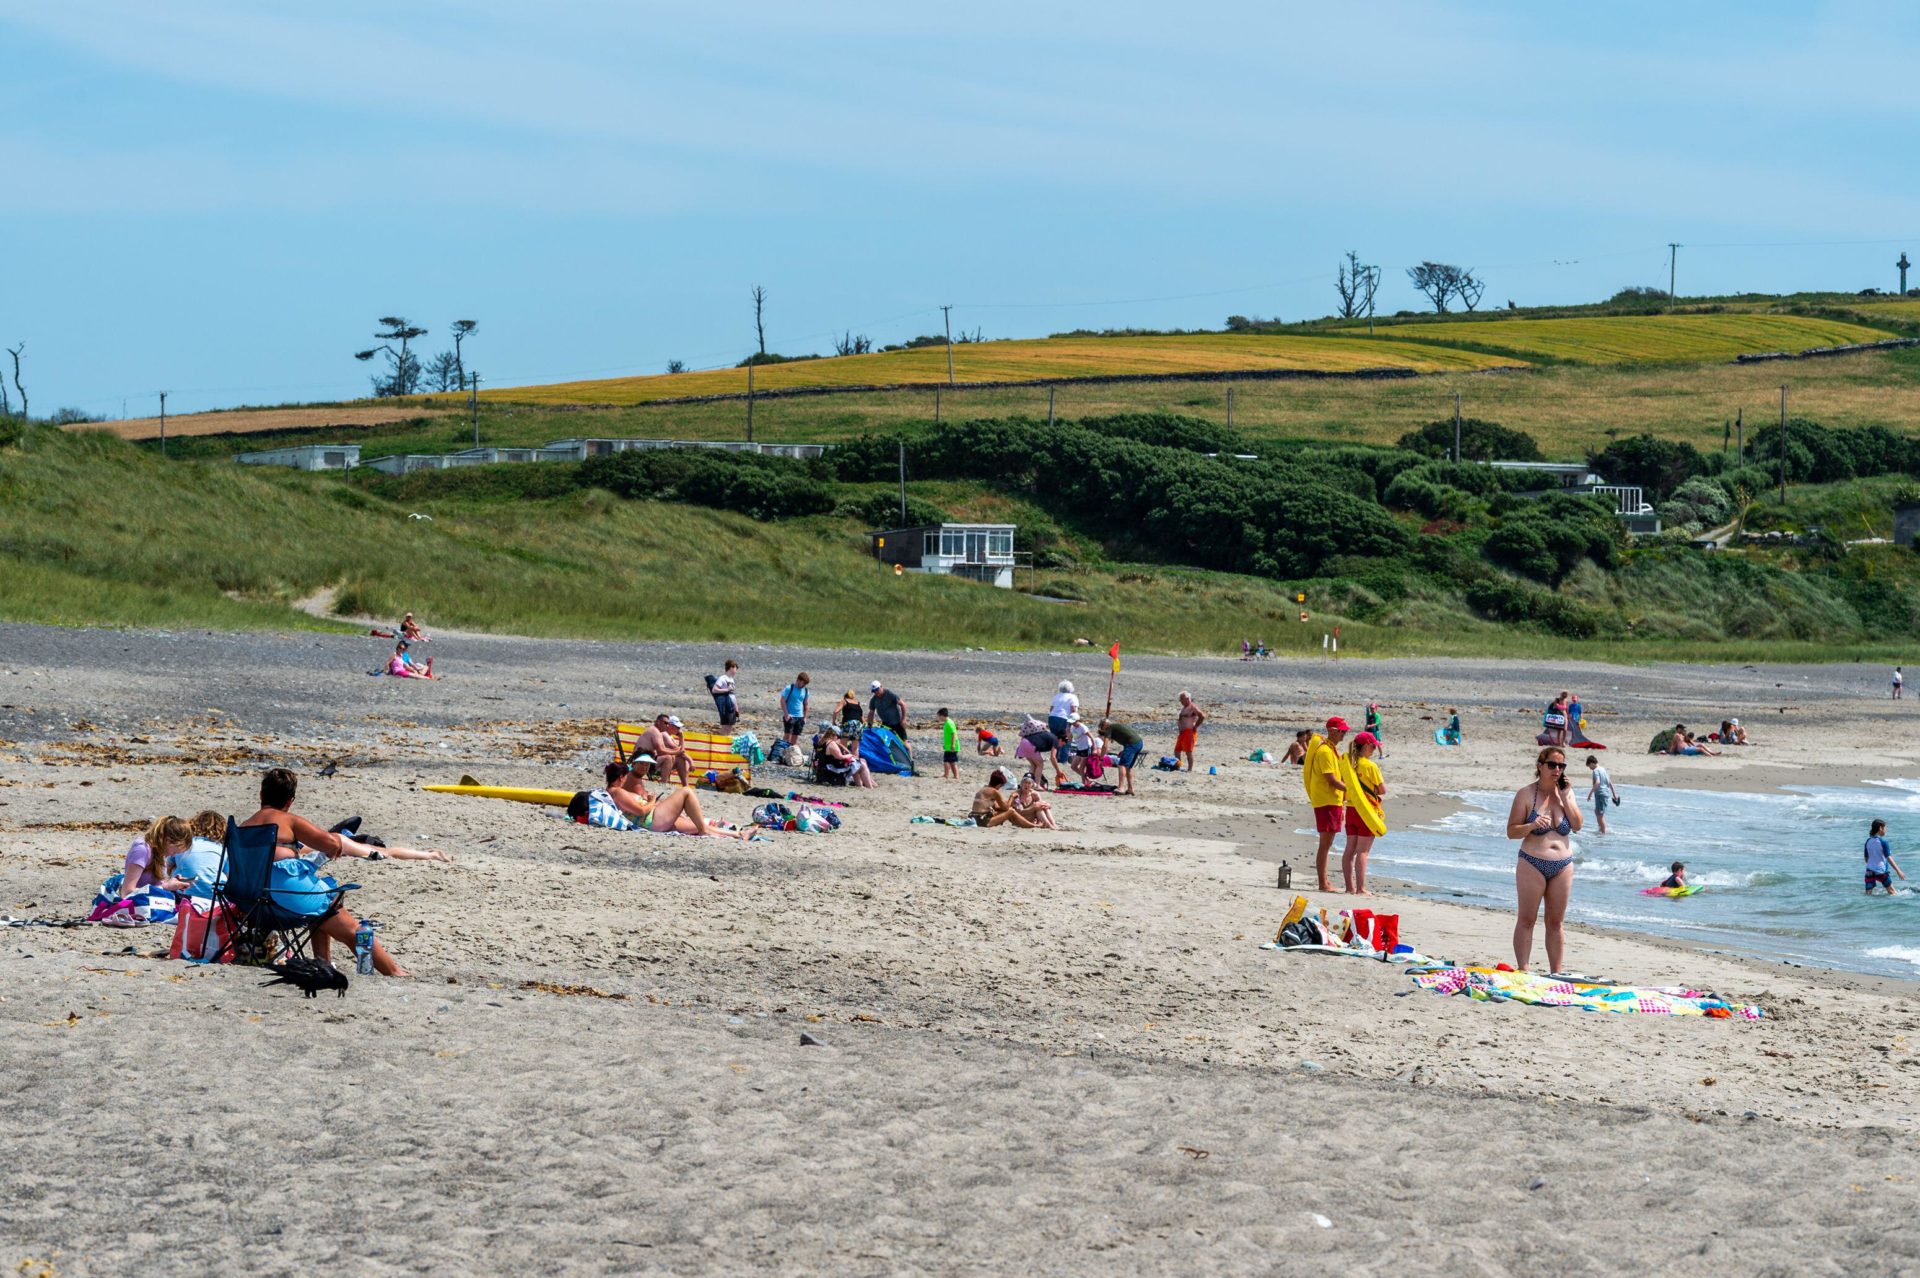 File photo of Owenahincha Beach in West Cork on 21st July, 2021 Image: Antoinette Mason / Alamy Stock Photo